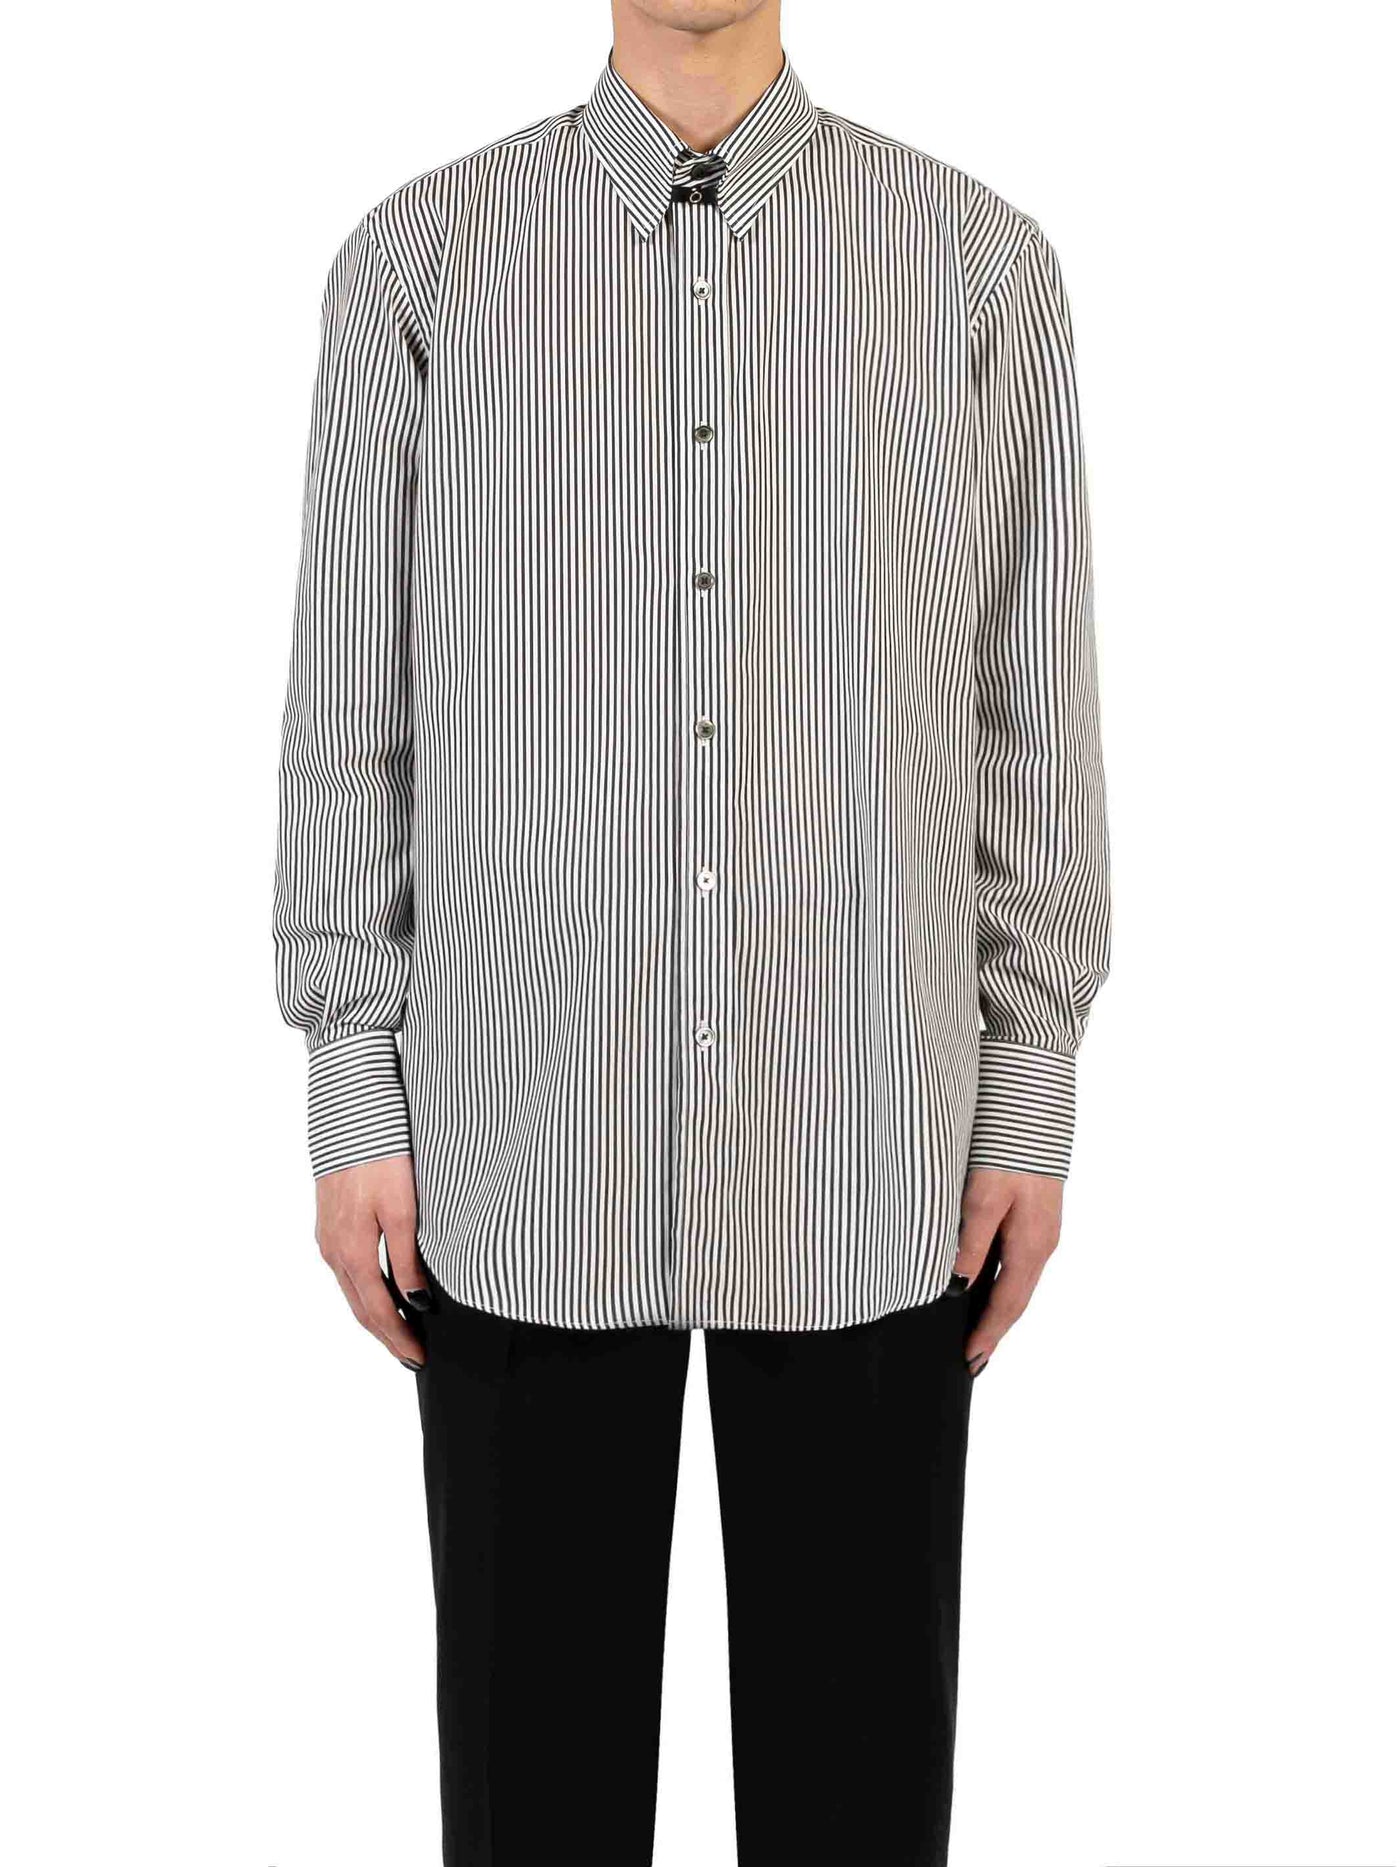 Stripe broadcloth tab collar shirt